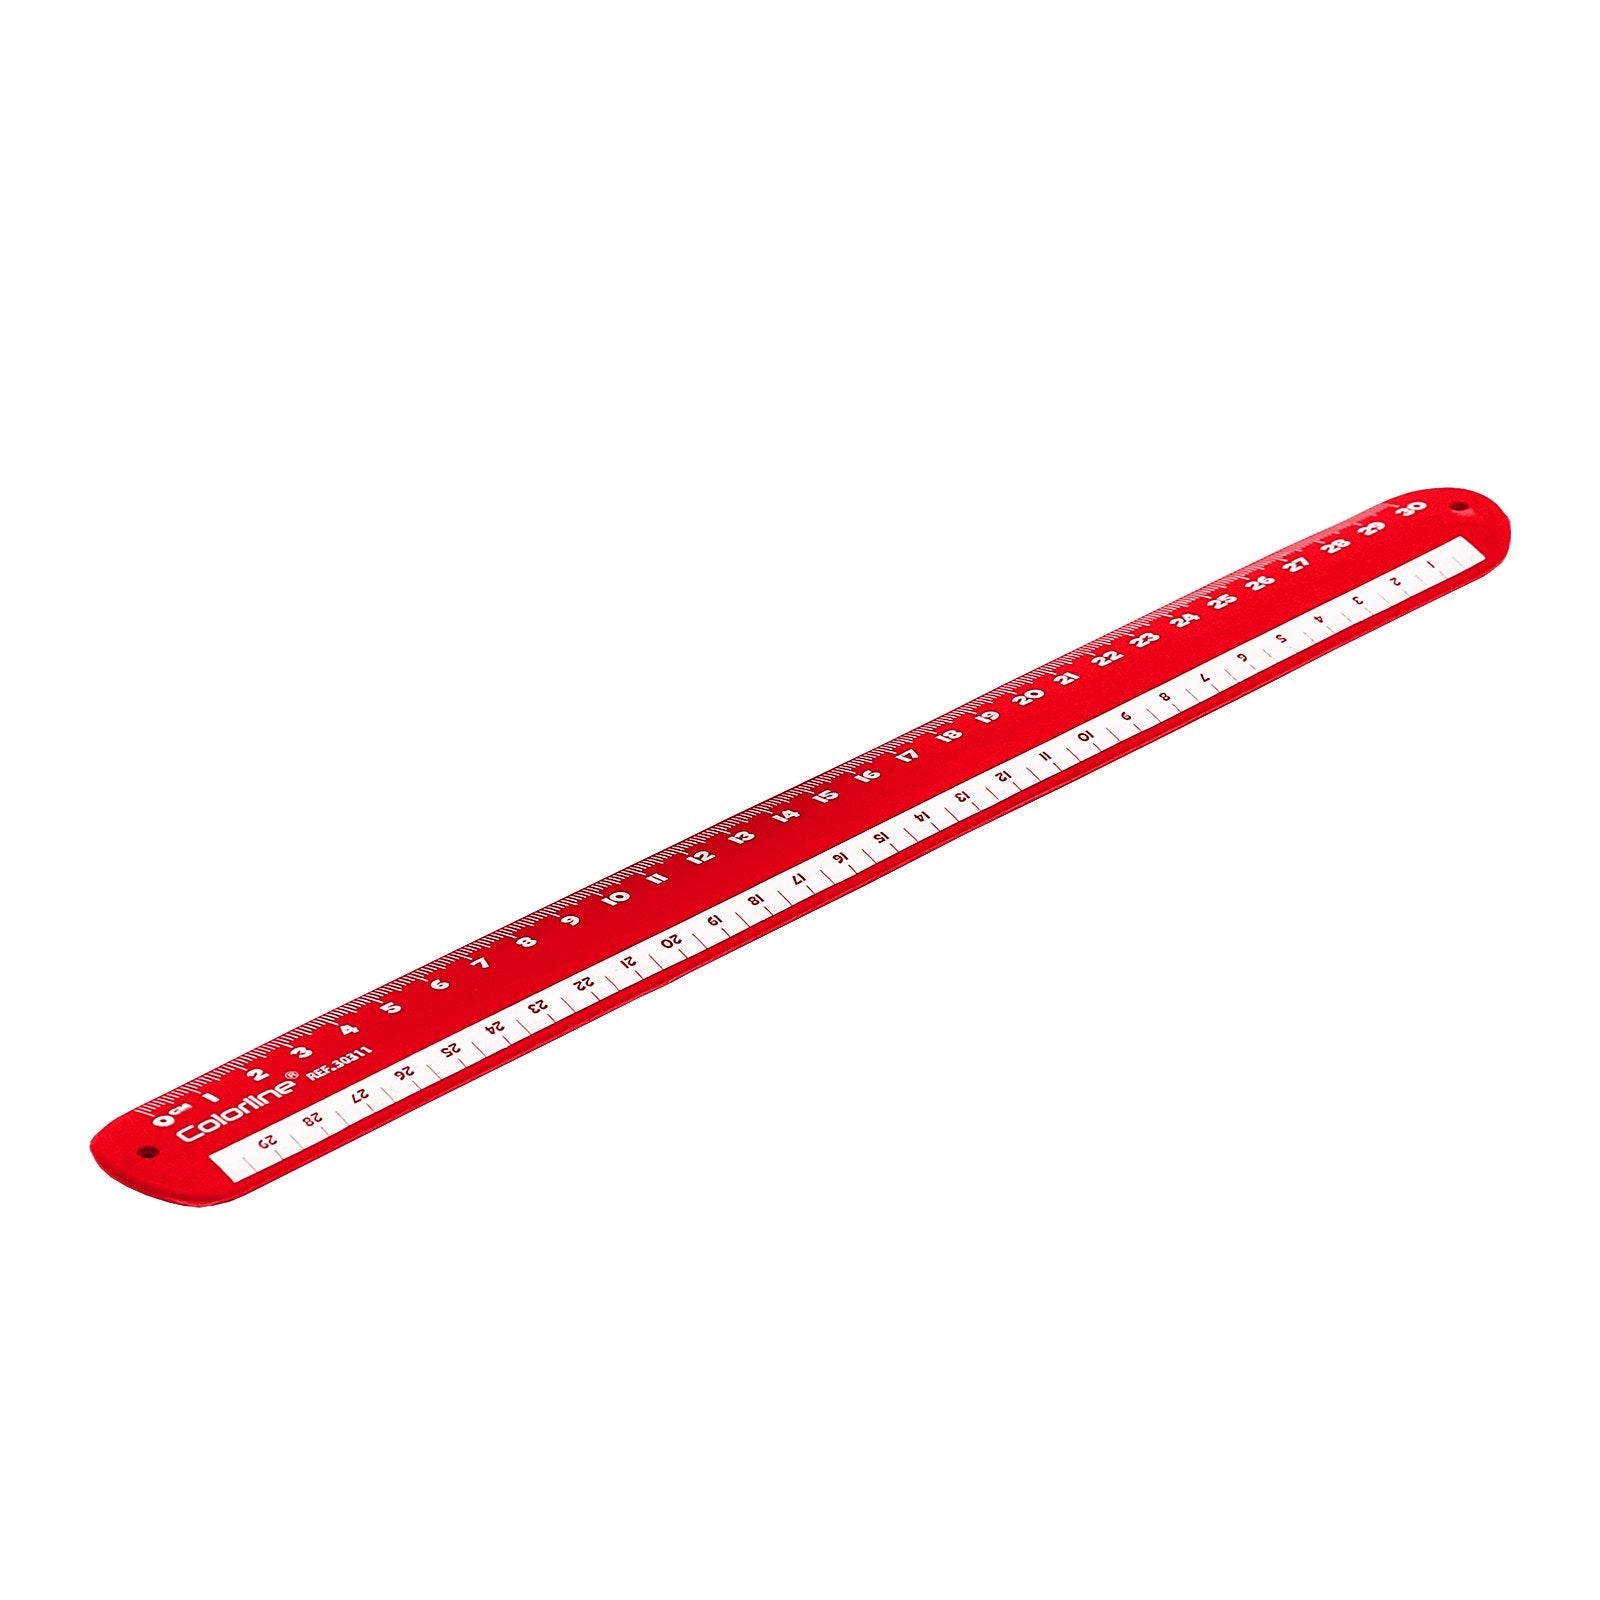 Colorline Rulómetro - Regla Enrollable 30 cm en Silicona. Acabado Soft-Touch. Rojo